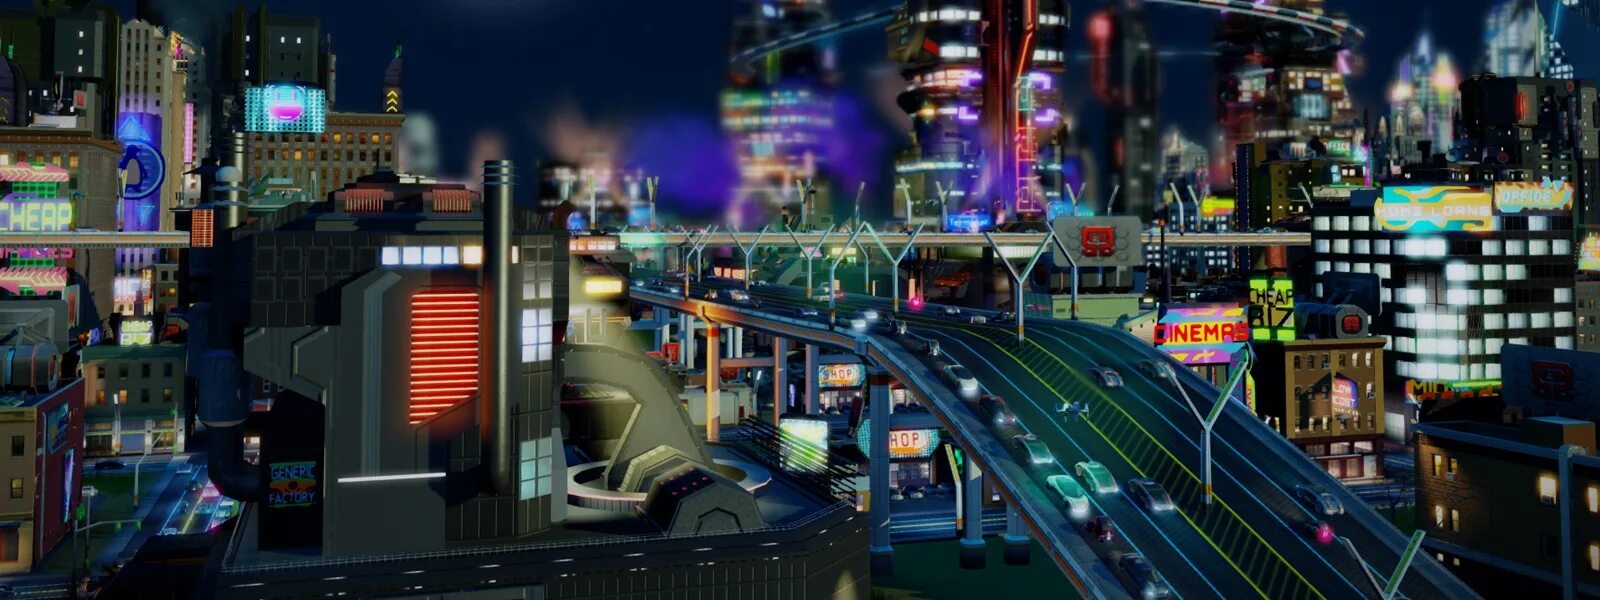 SIMCITY 2013 Cities of tomorrow. Cities Skylines Nintendo Switch. SIMCITY Societies антиутопия. SIMCITY 5 киберпанк. Skyline nintendo